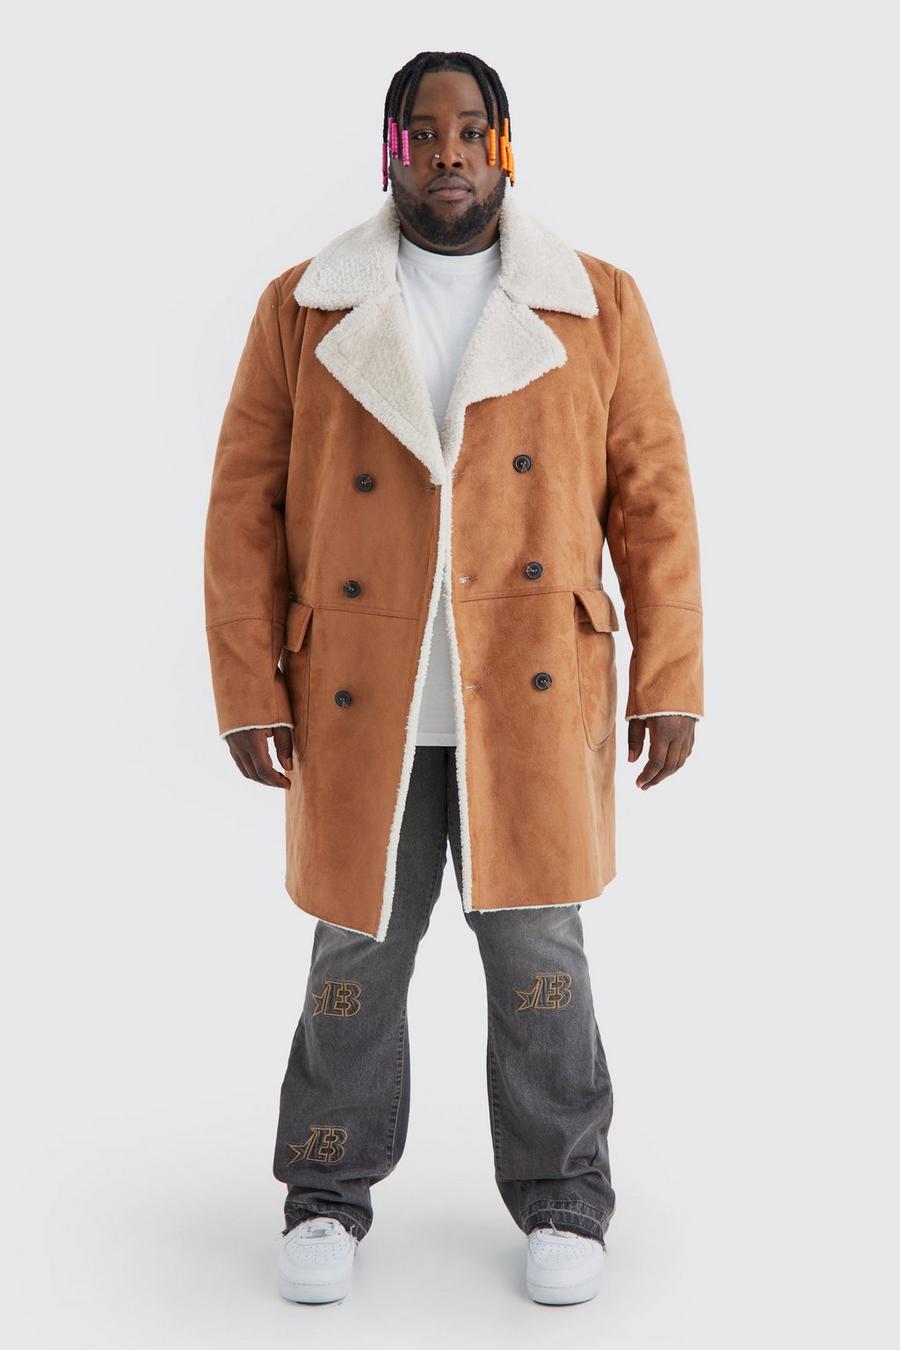 Mens Outwear Jacket Coat Men’s Slim Fit Solid Color Lightweight Softshell Flight Bomber Jacket Coat Plus Size M-6XL 